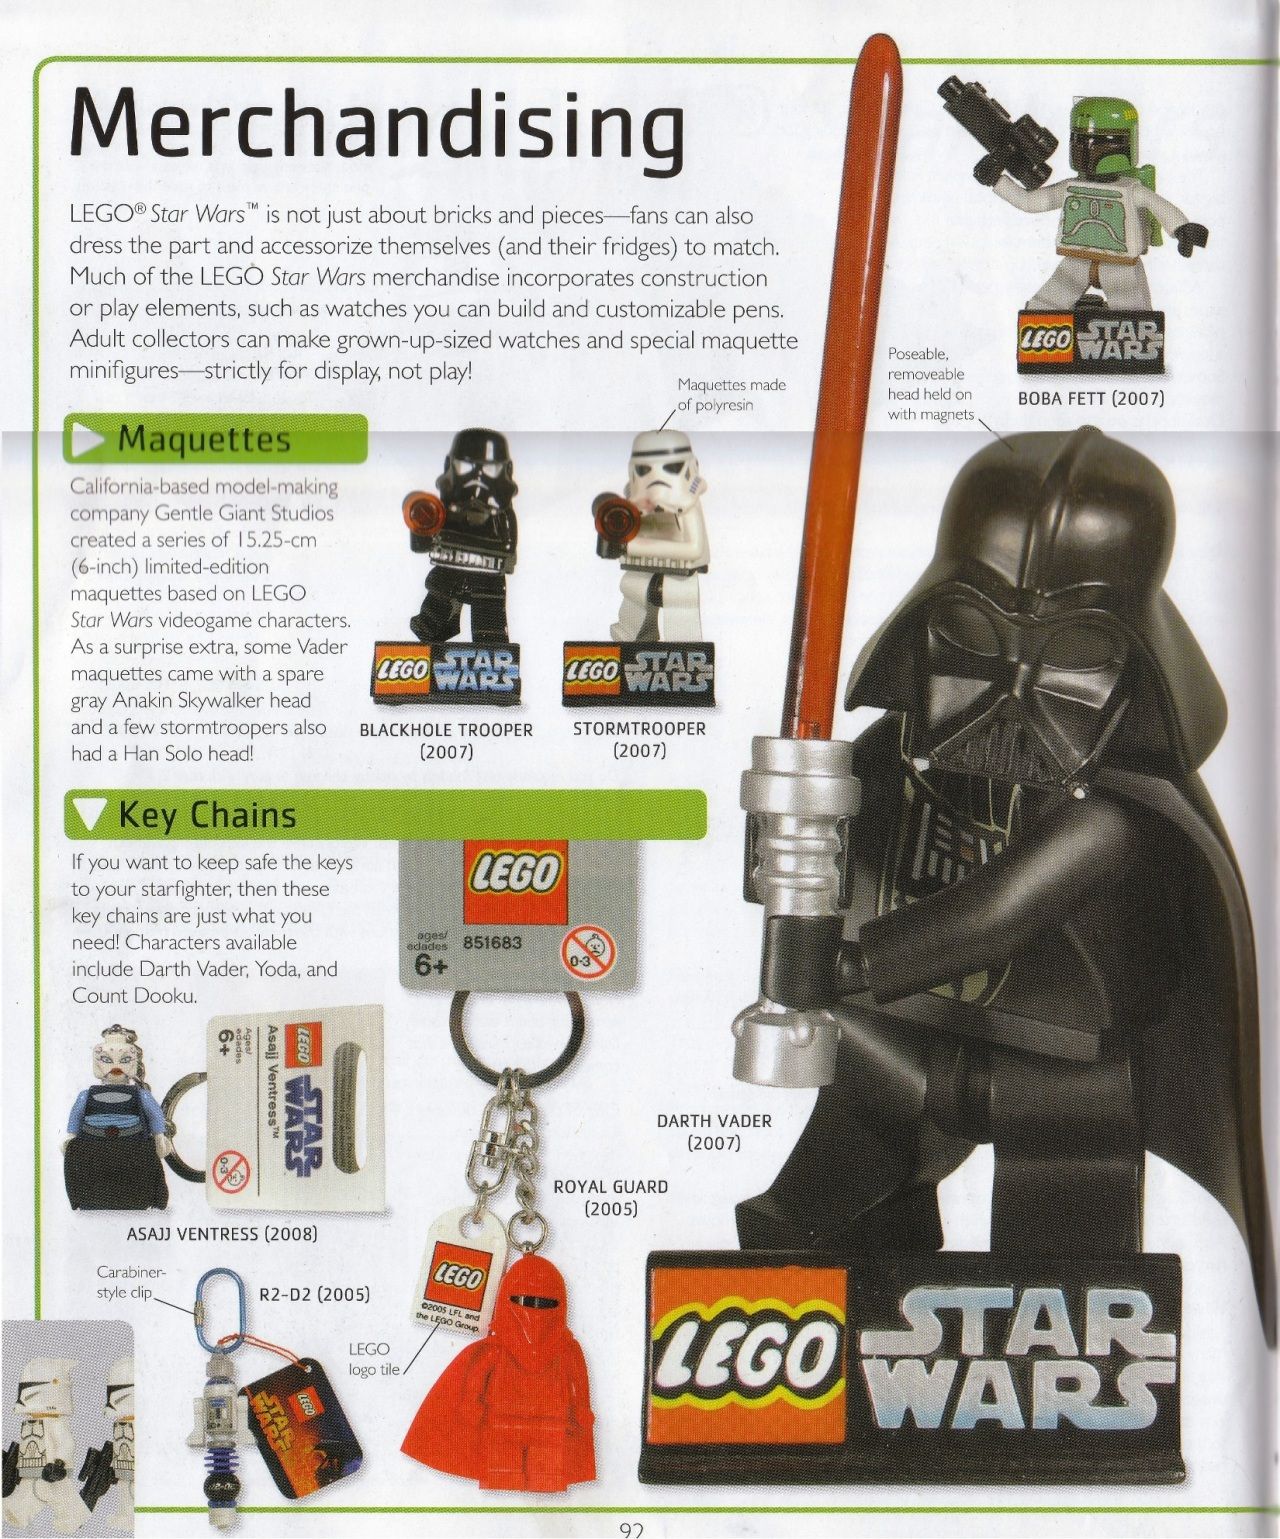 Lego Star Wars The Visual Dictionary 2009 Lego Star Wars The Visual Dictionary 2009 93